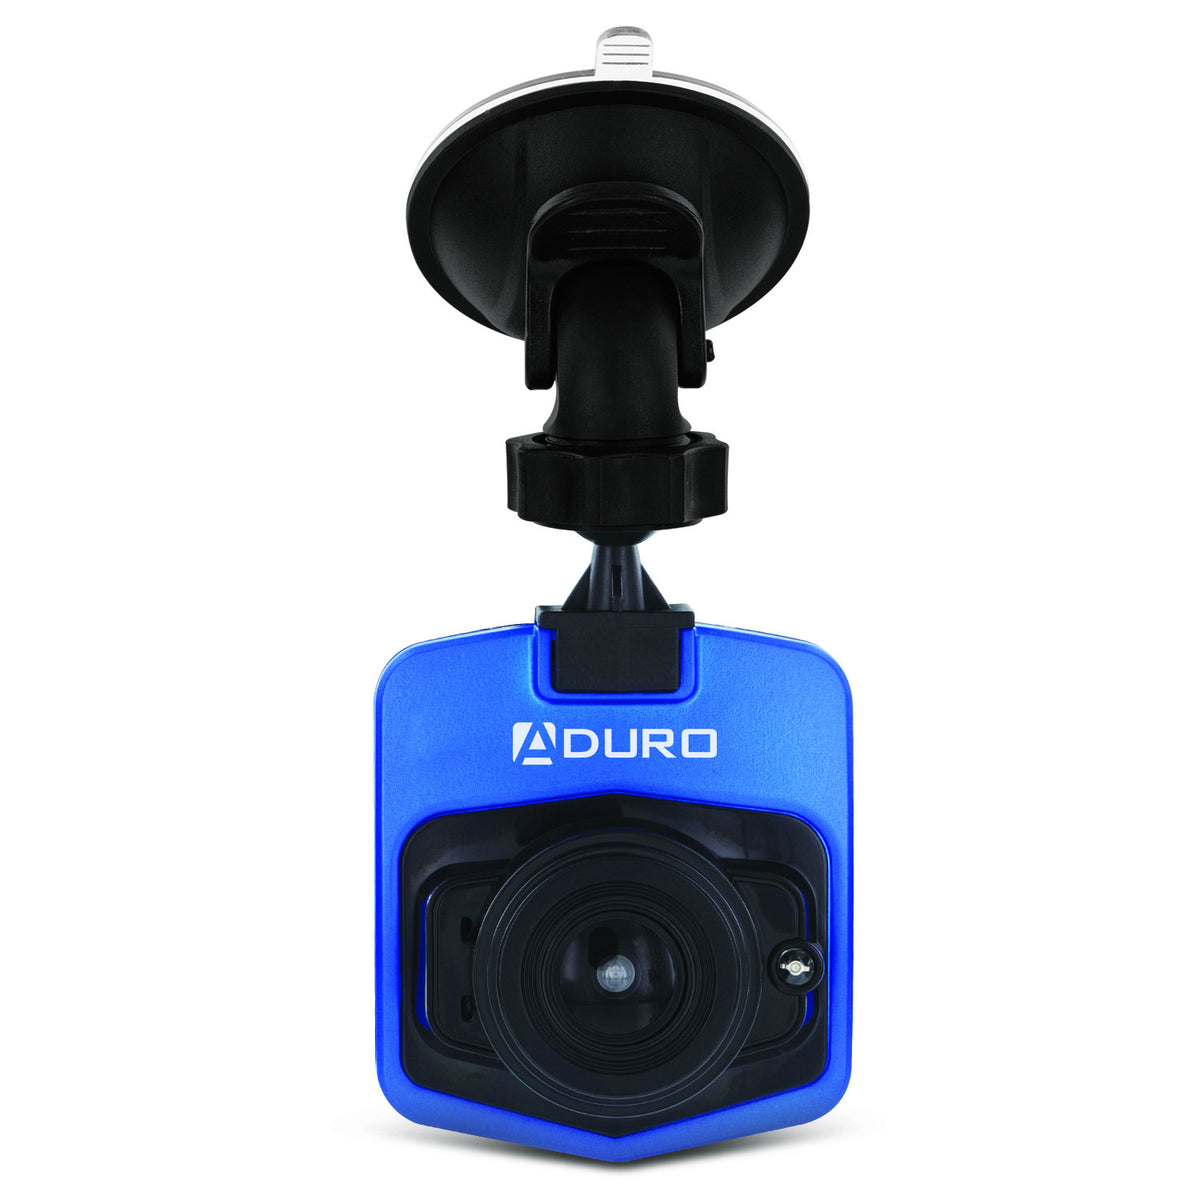 https://www.aduroproducts.shop/wp-content/uploads/1691/58/ignite-your-style-aduro-u-drive-pro-hd-1080p-dvr-dash-cam-n-a_1.jpg